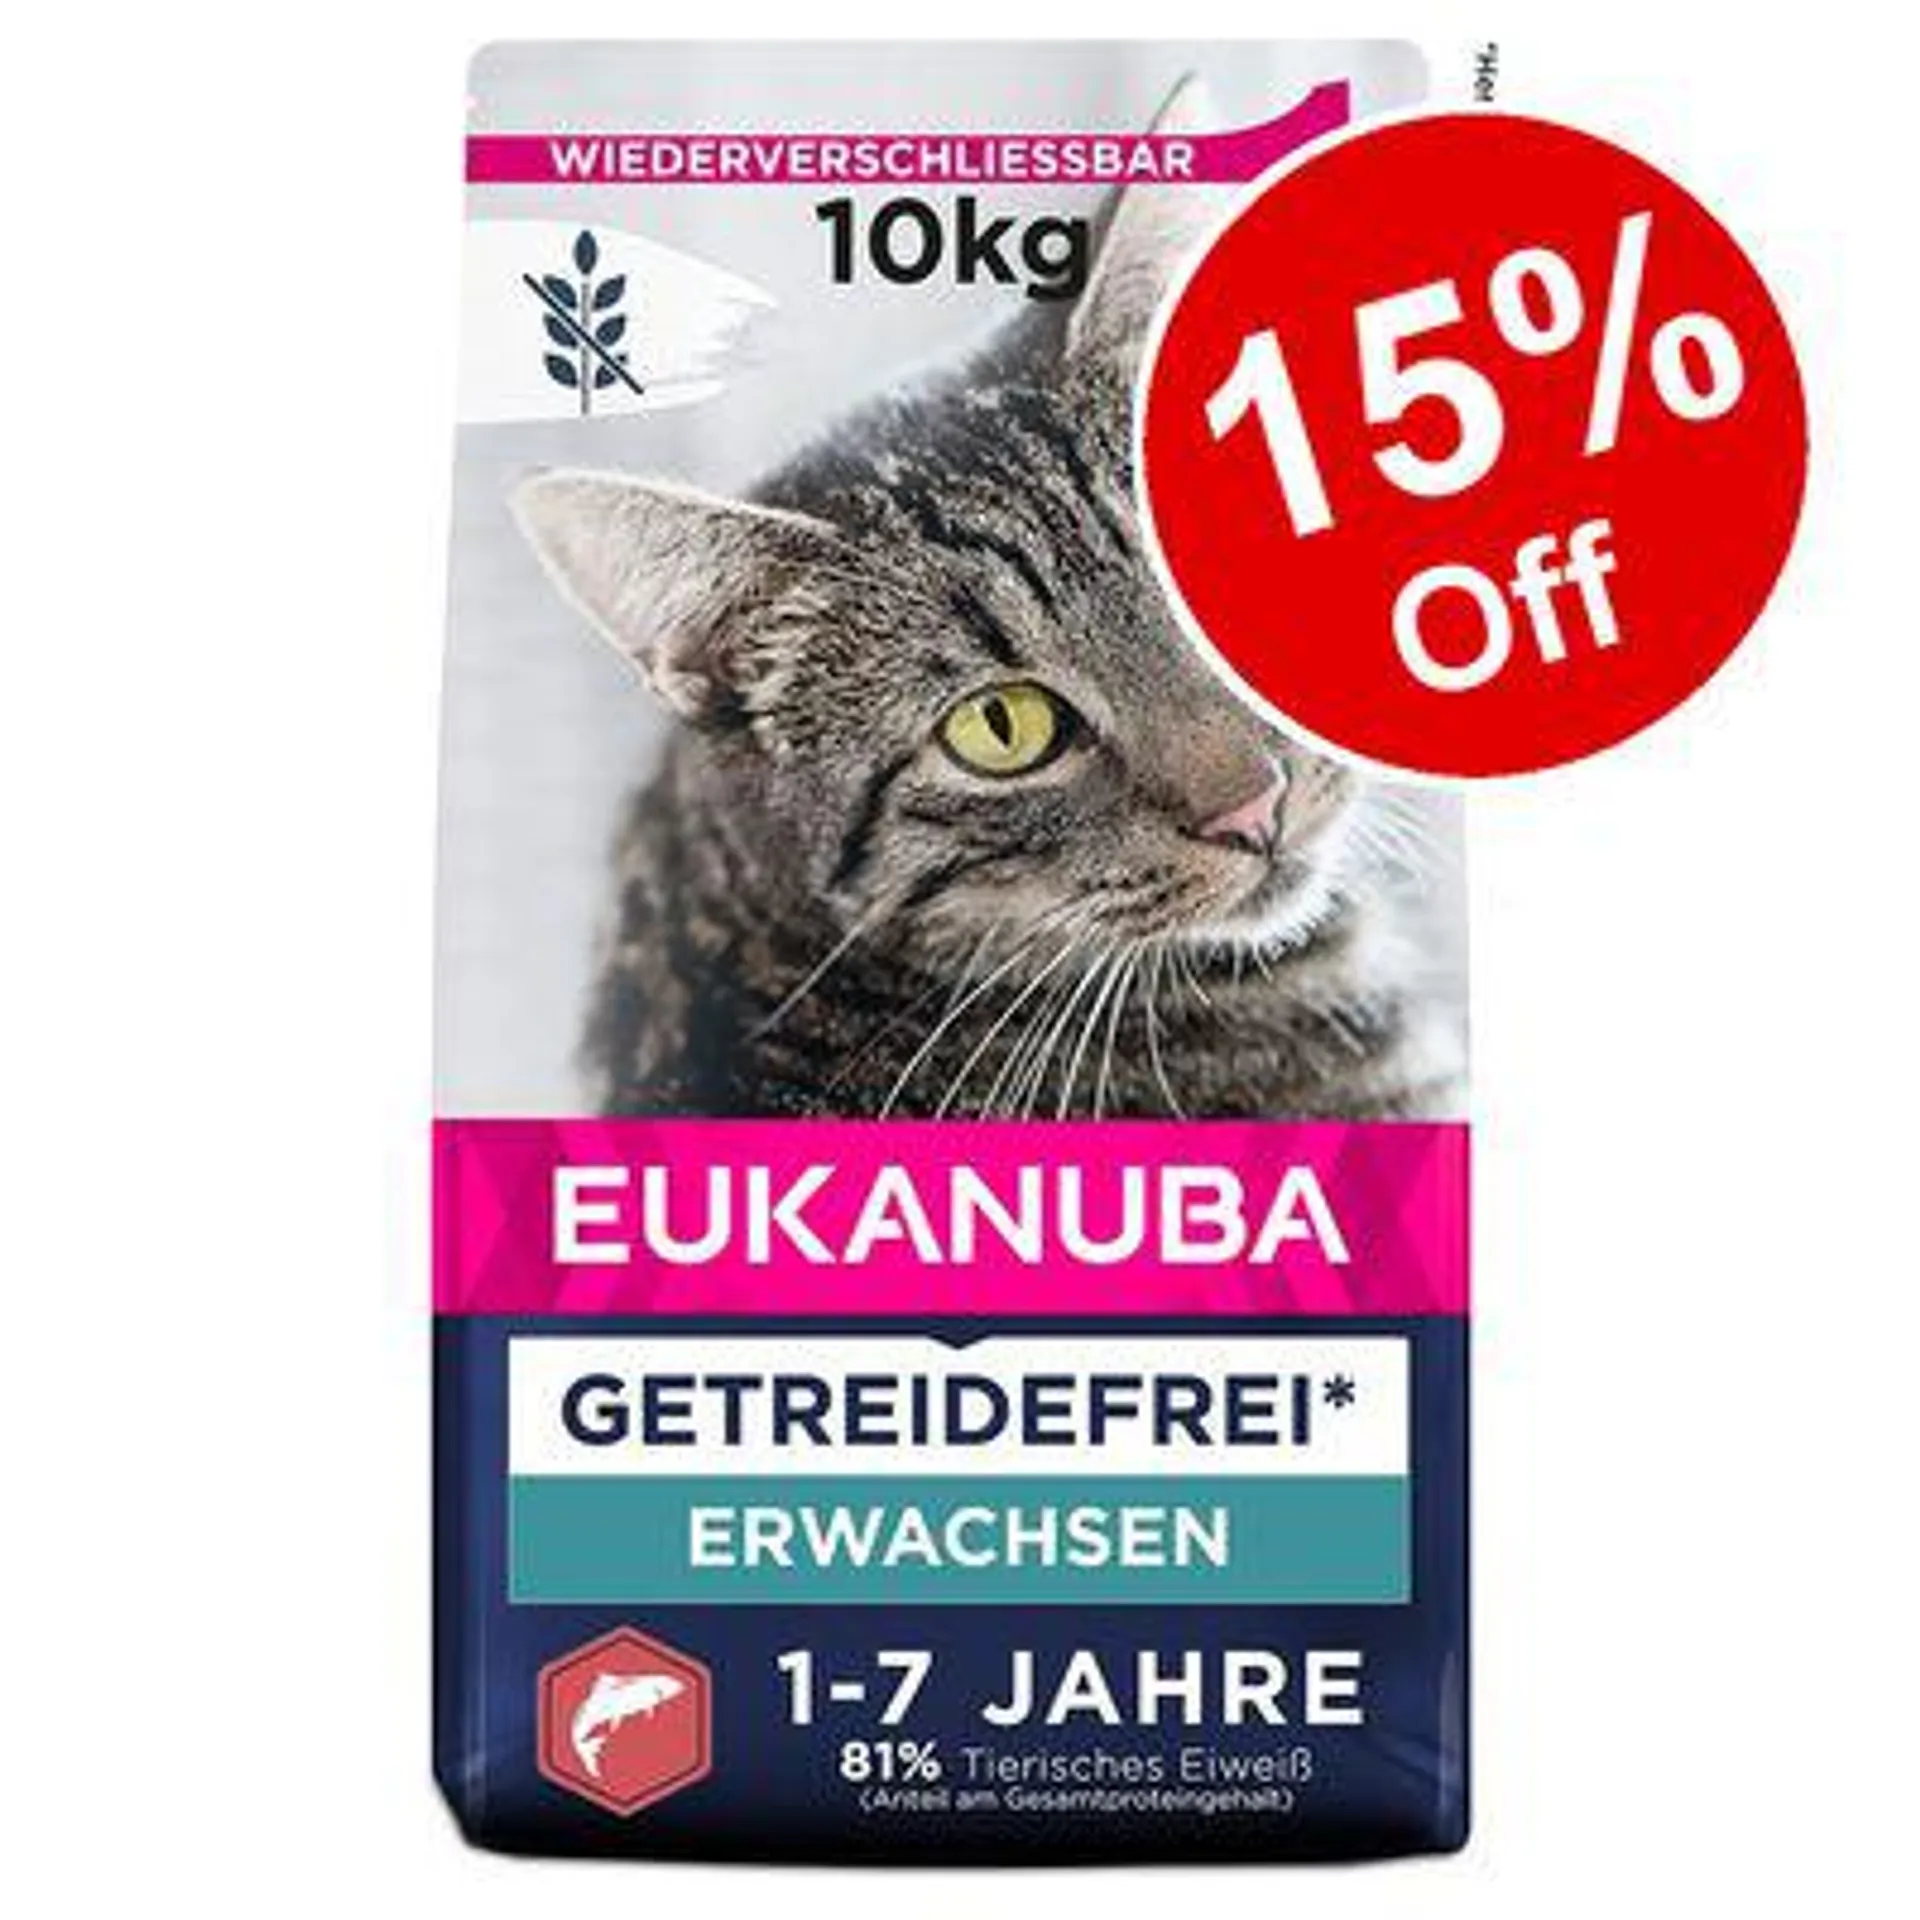 10kg Eukanuba Grain-Free Adult/Senior Dry Cat Food - 15% Off! *